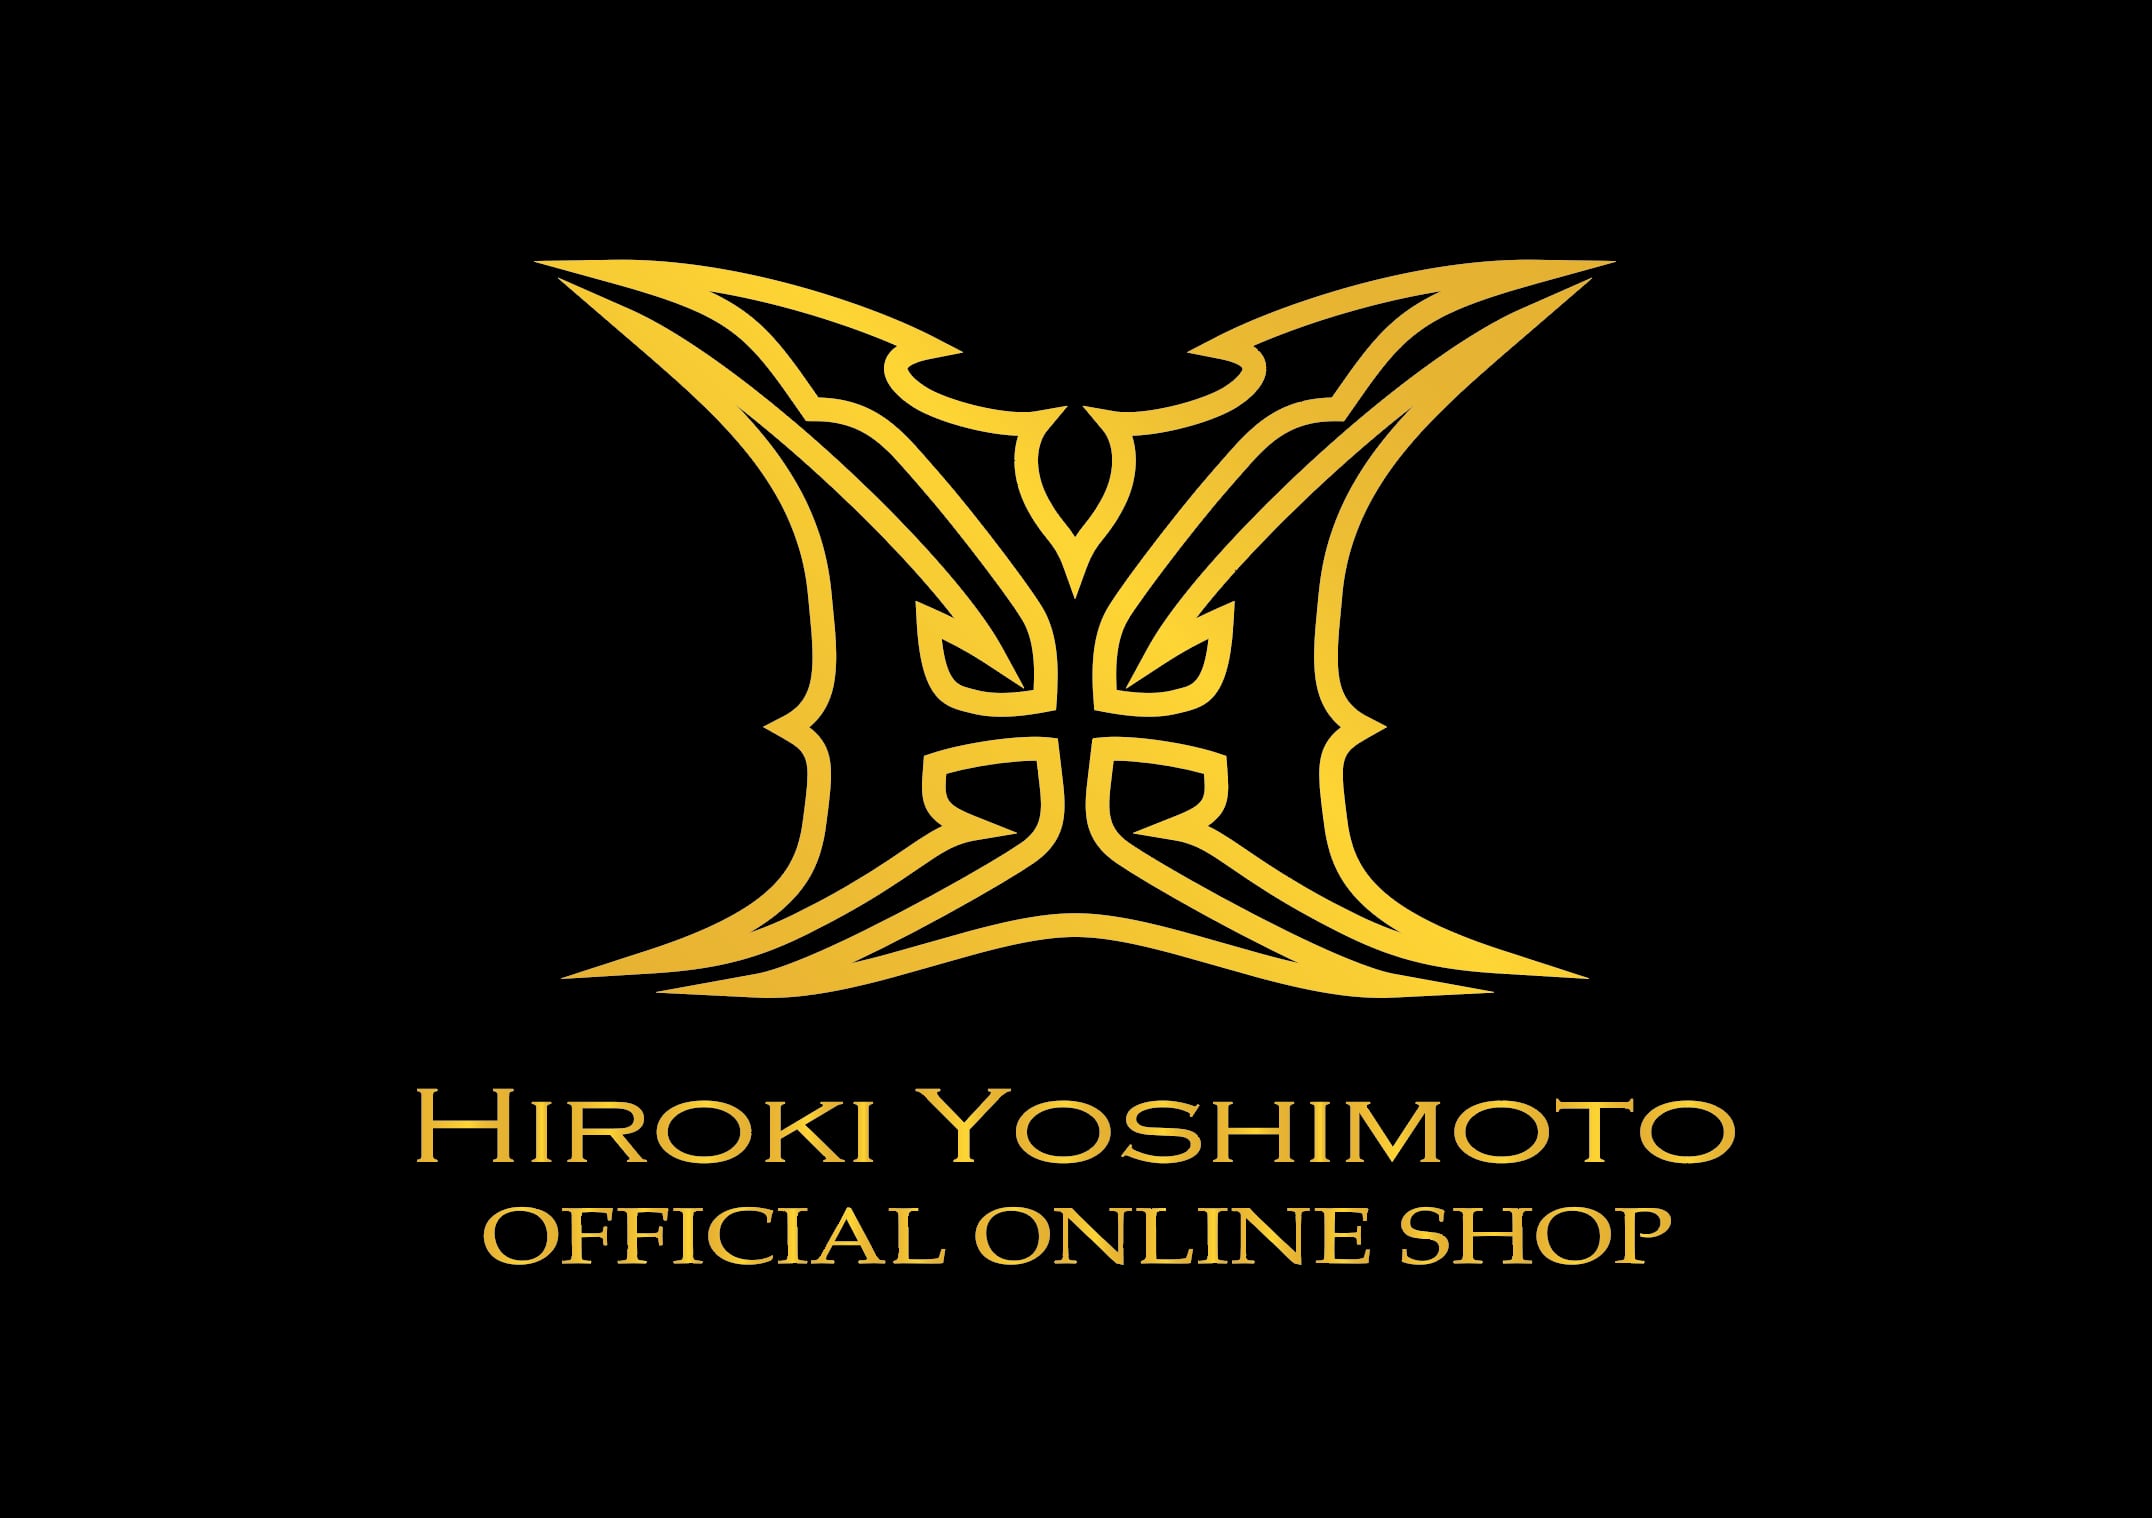 HIROKI YOSHIMOTO OFFICIAL ONLINE SHOP